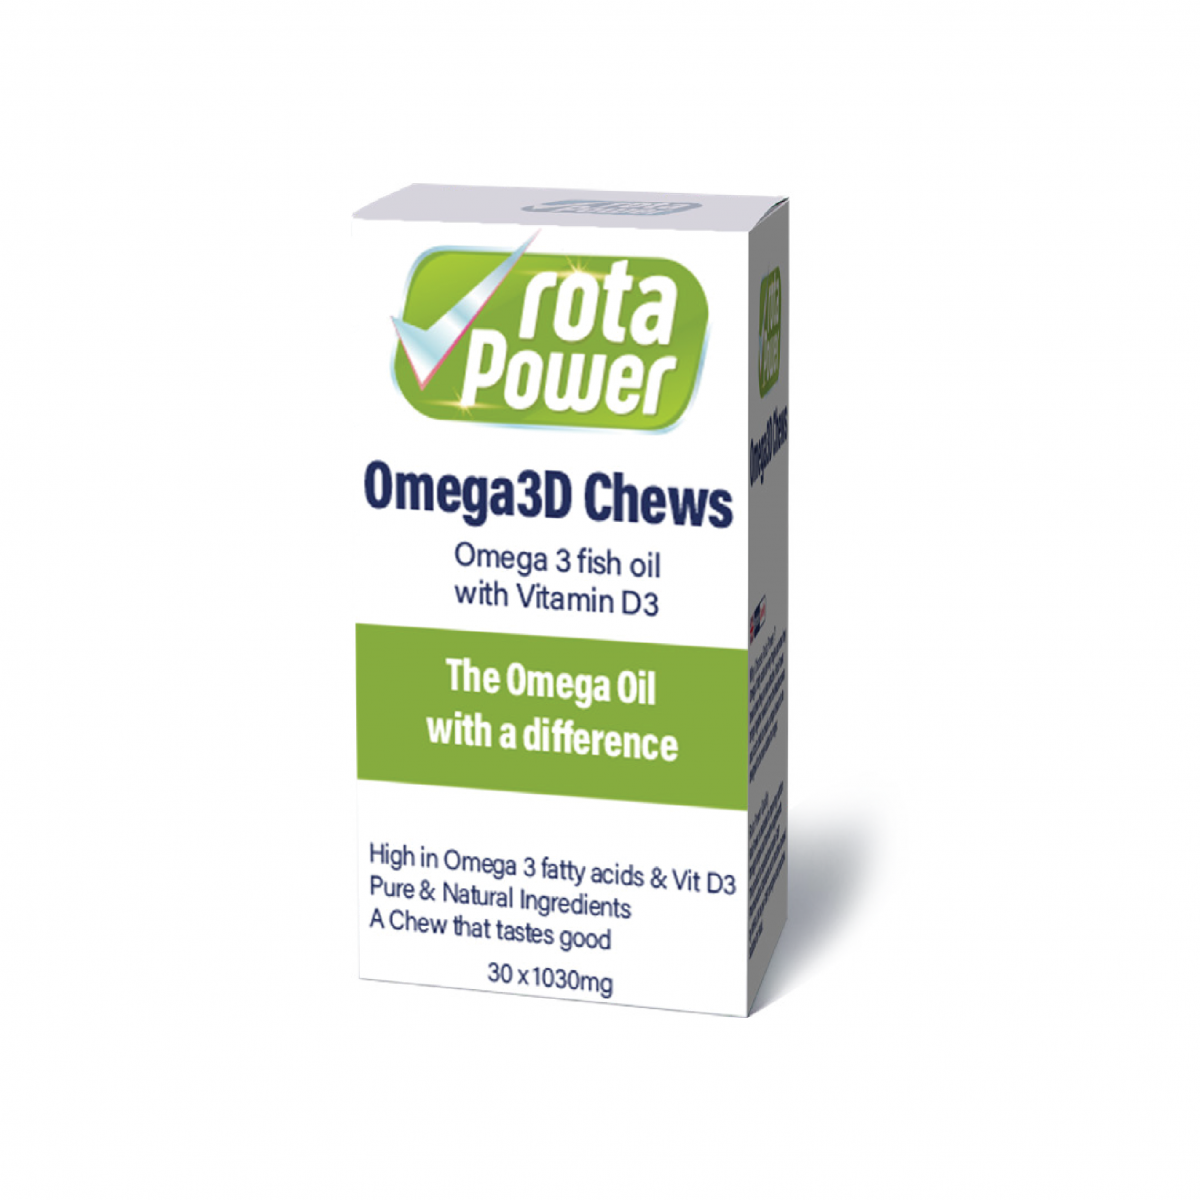 rota power omega 3d chews